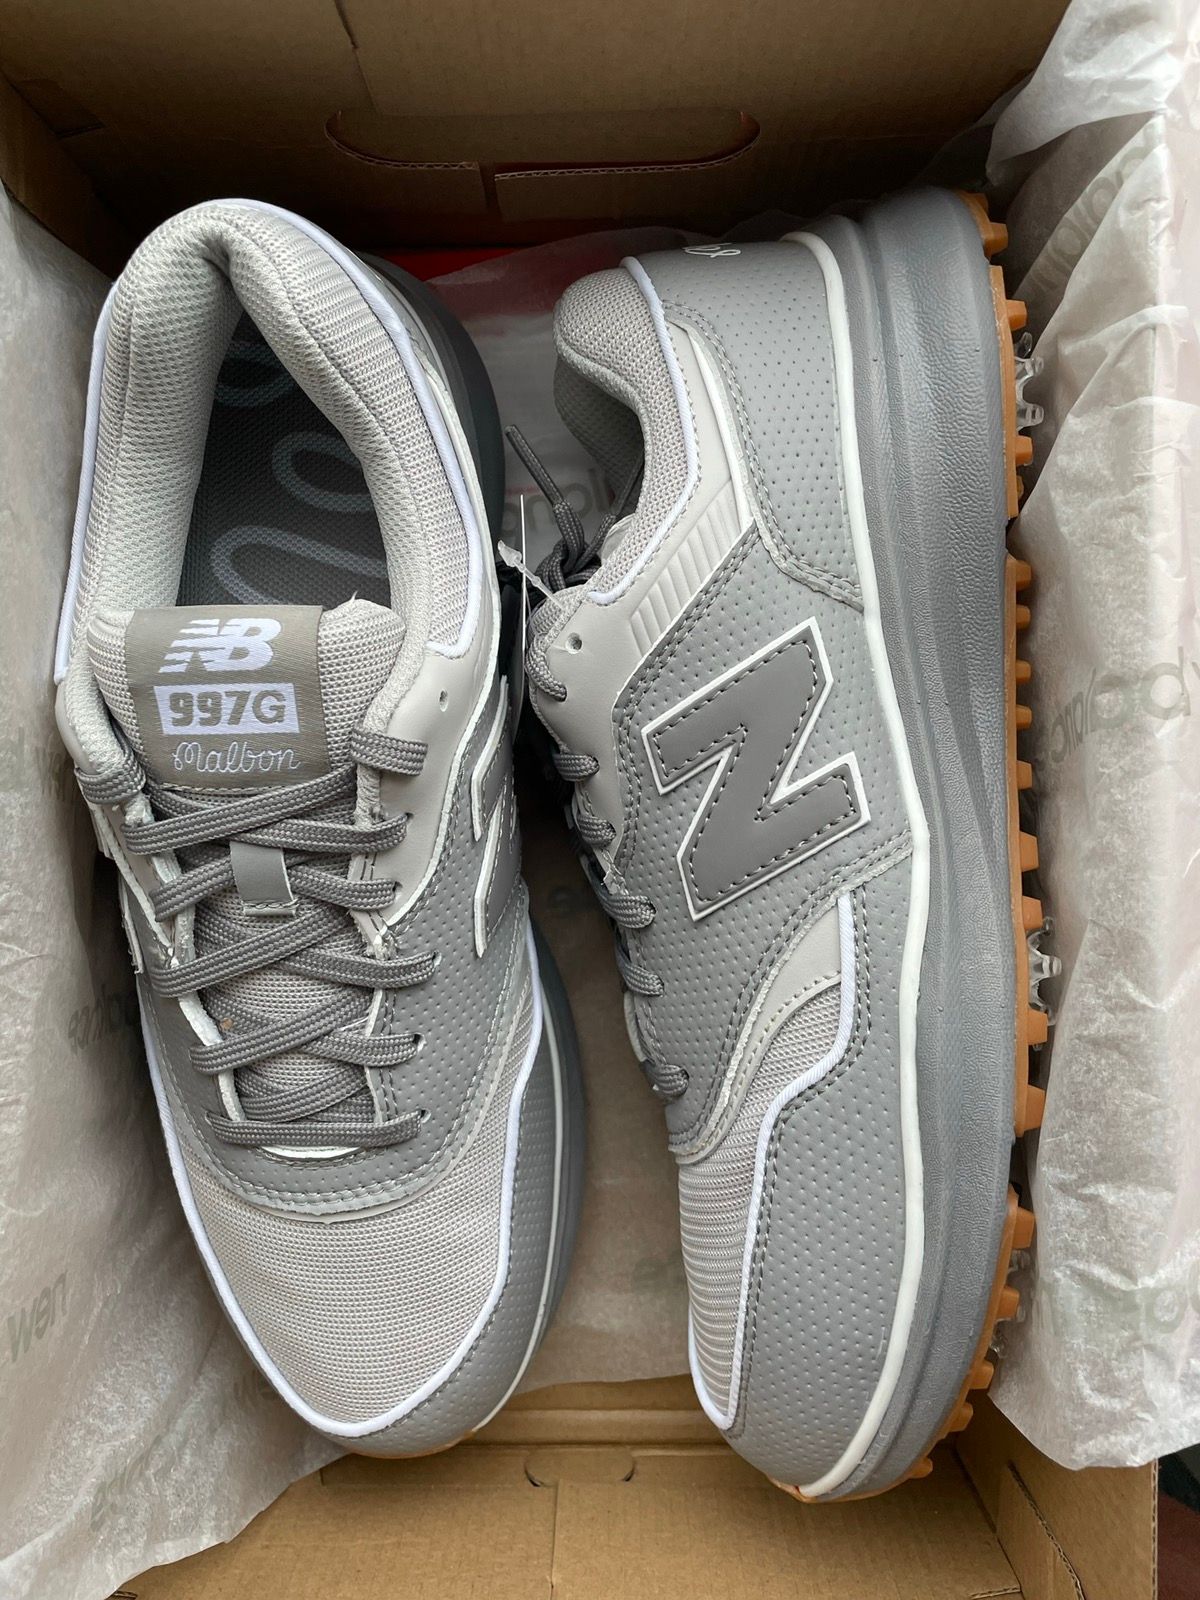 New Balance BNIB Malbon Golf x New Balance 997G Golf Shoes Grey US